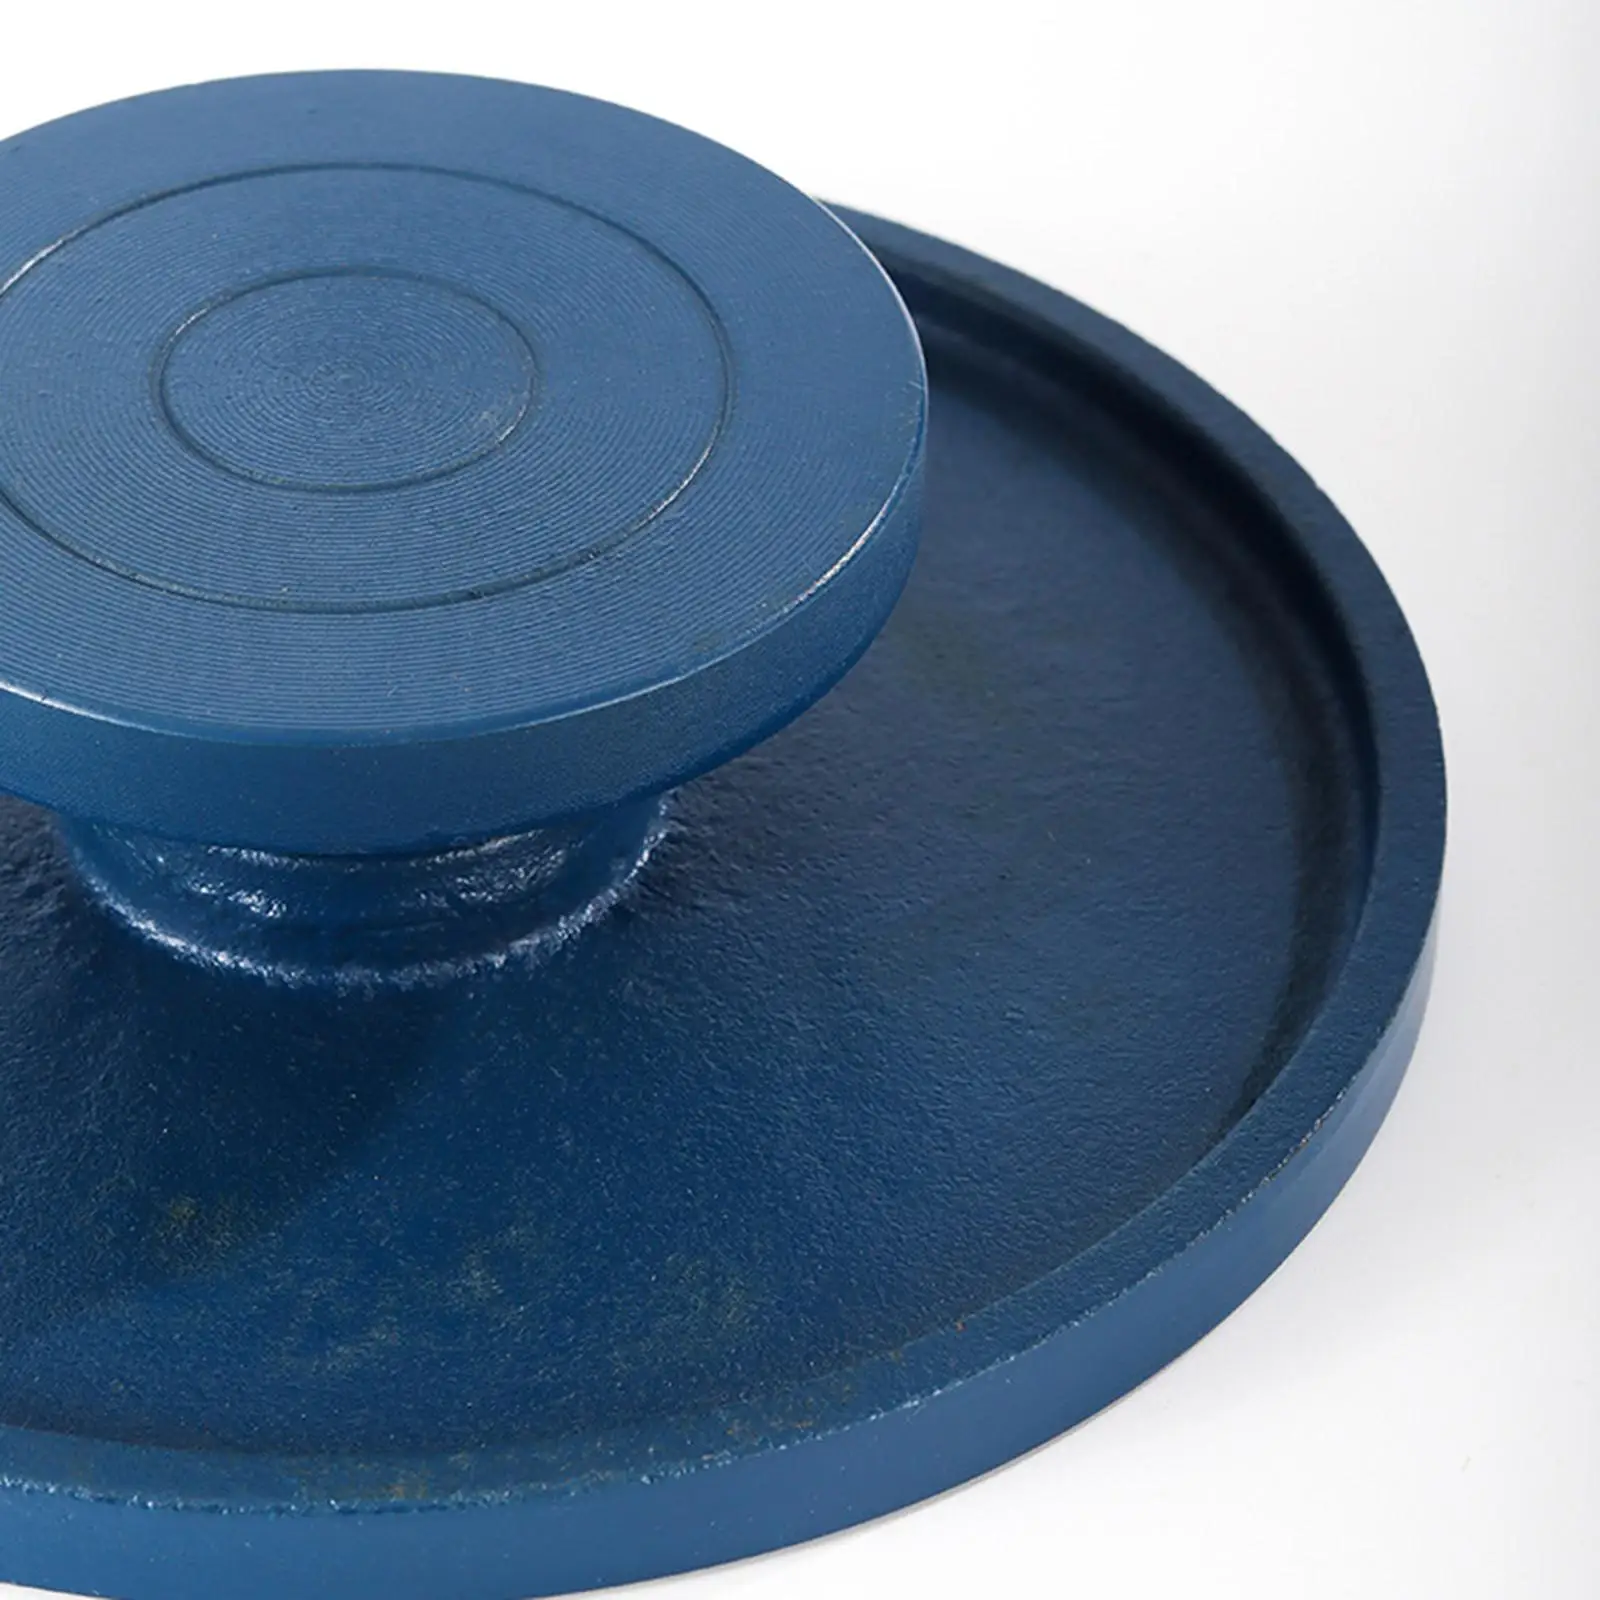 5.9inch Sculpting Wheel Sculptor Turntable Accessory Blue for Ceramic Studio